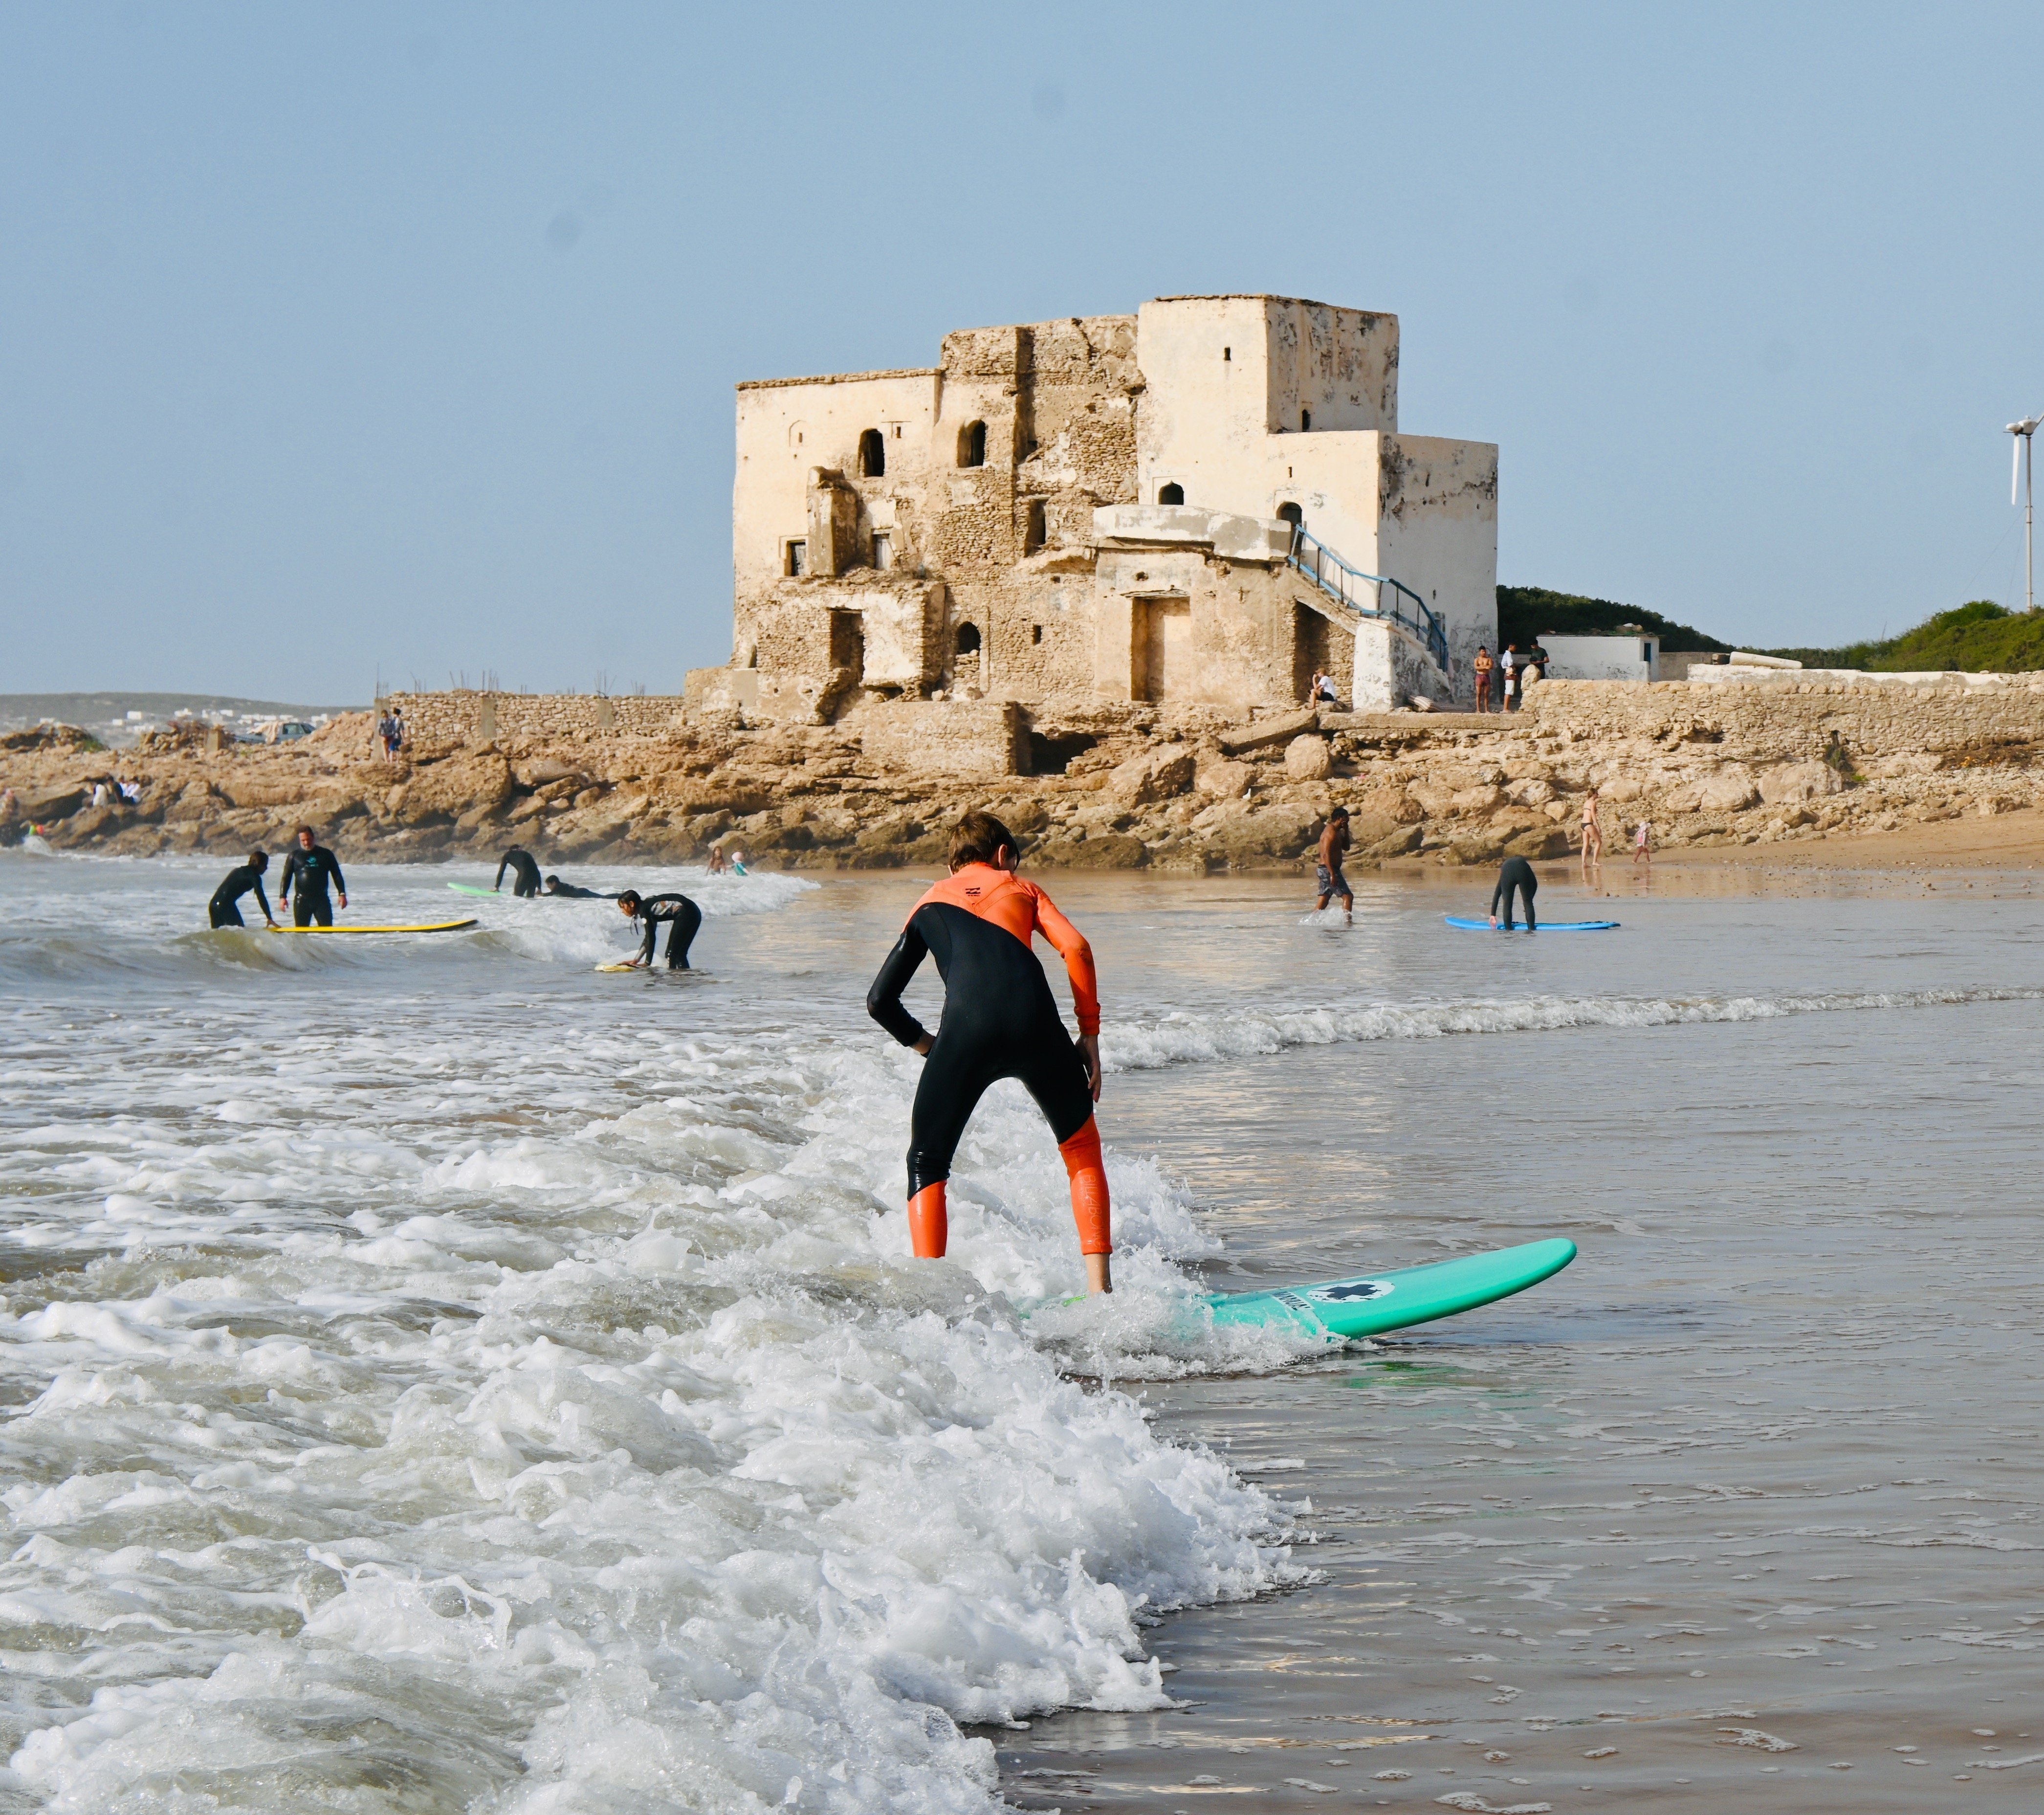 Marokko for family individuell - Erfahrungen mit Kindern in Marokko - Surfen im Atlantik